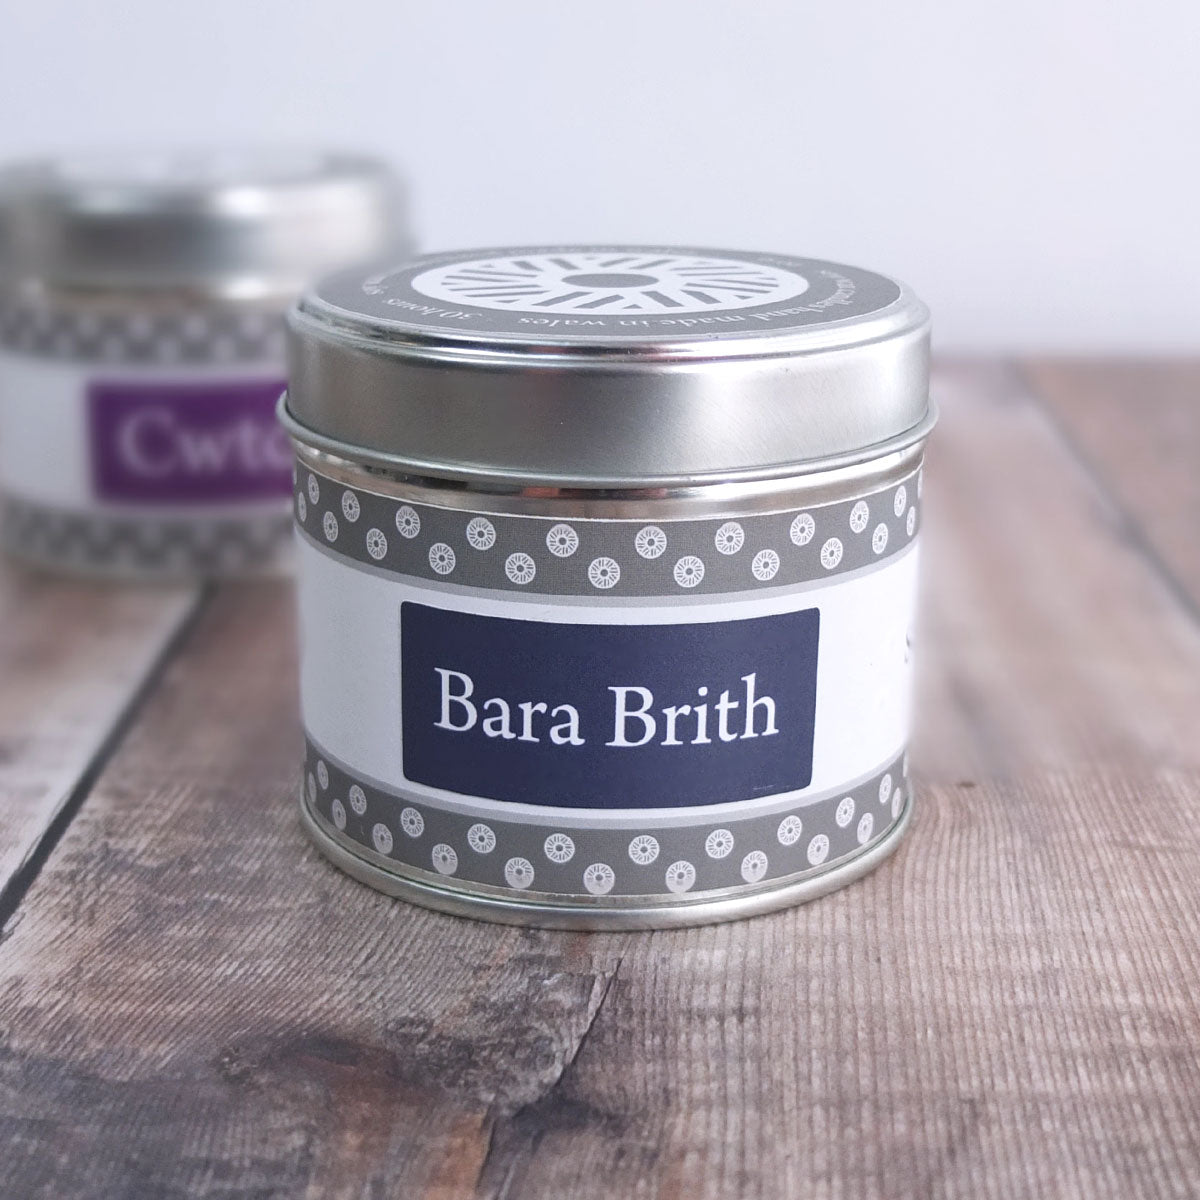 Bara Brith Tin Candle By Slate House